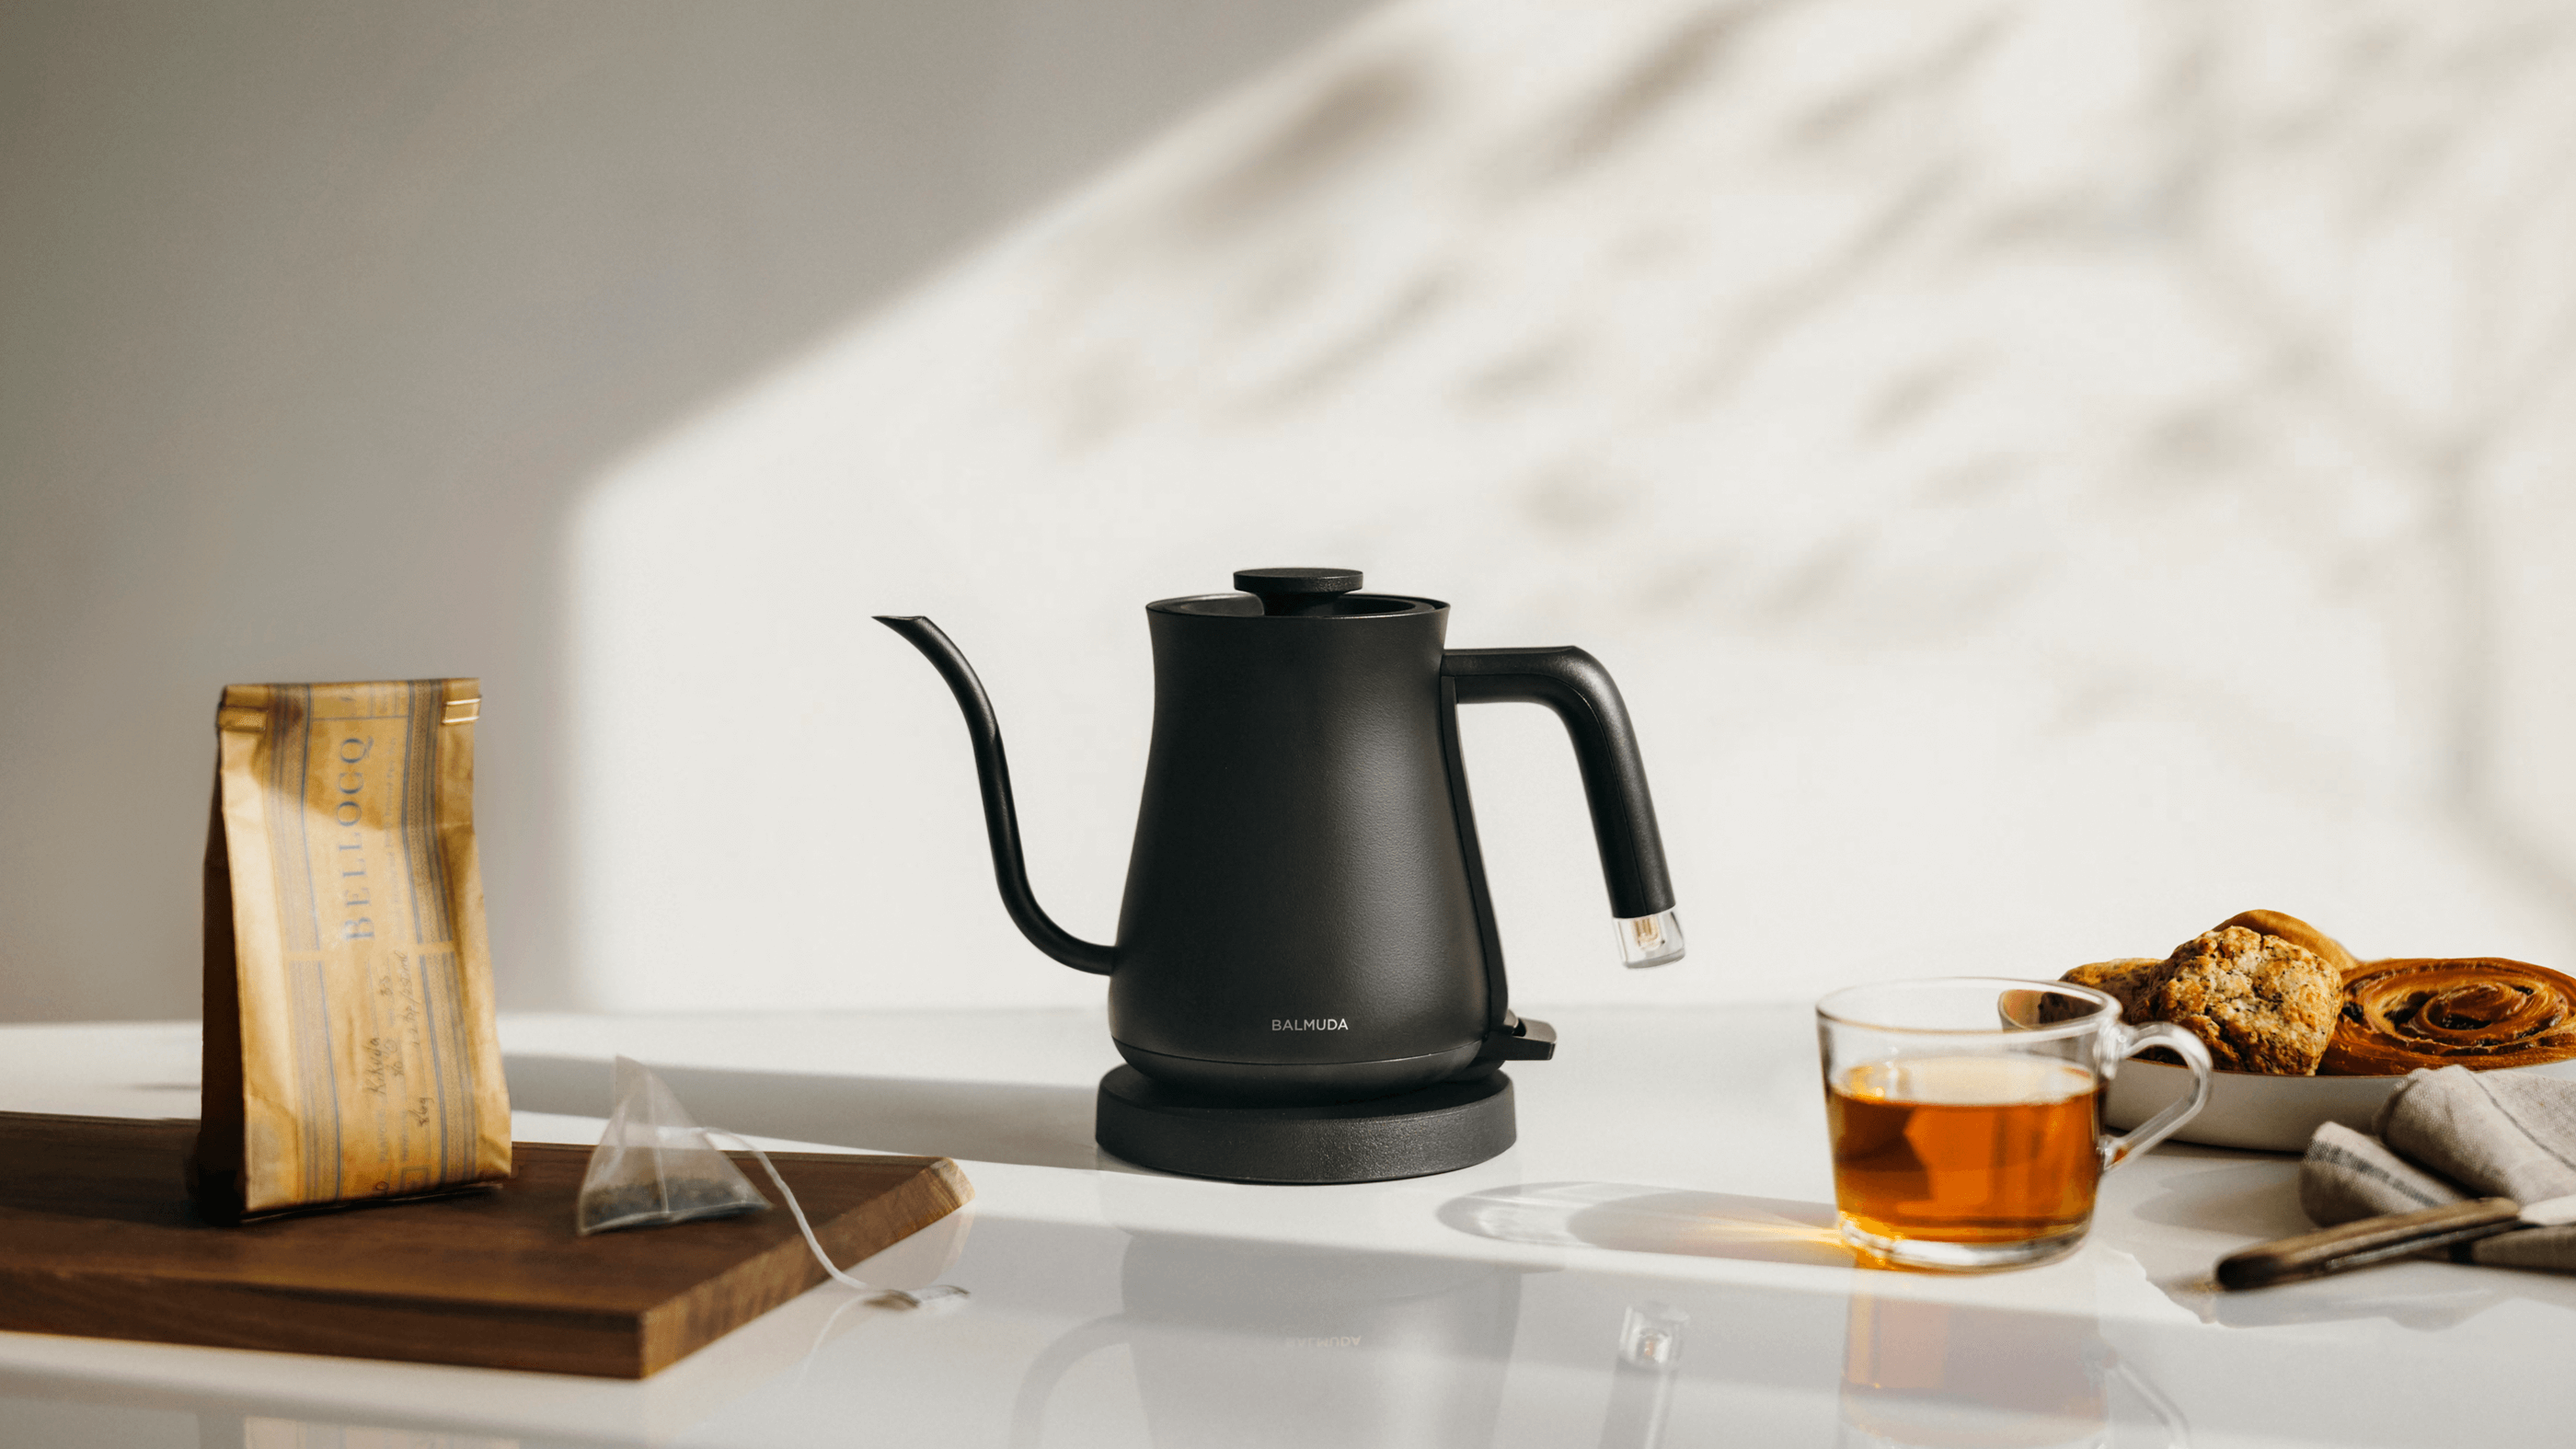 BALMUDA The Pot  Electric kettle, Hand drip coffee, Cool designs